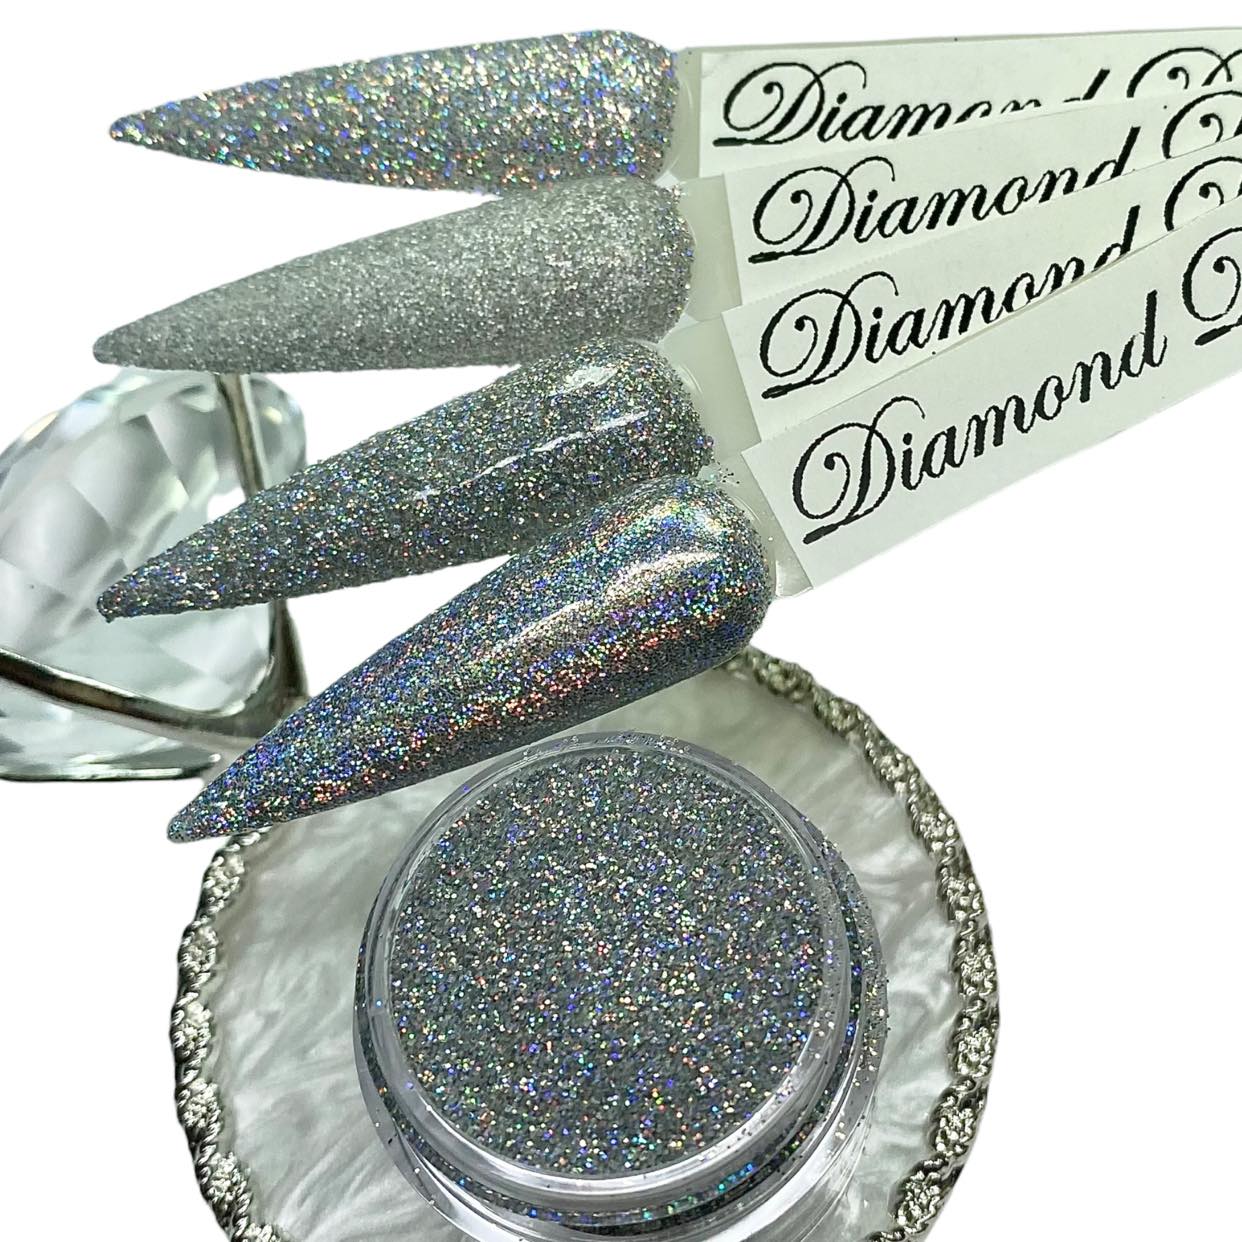 Holographic Glitter Nail Powder – Royal House Of Beauty